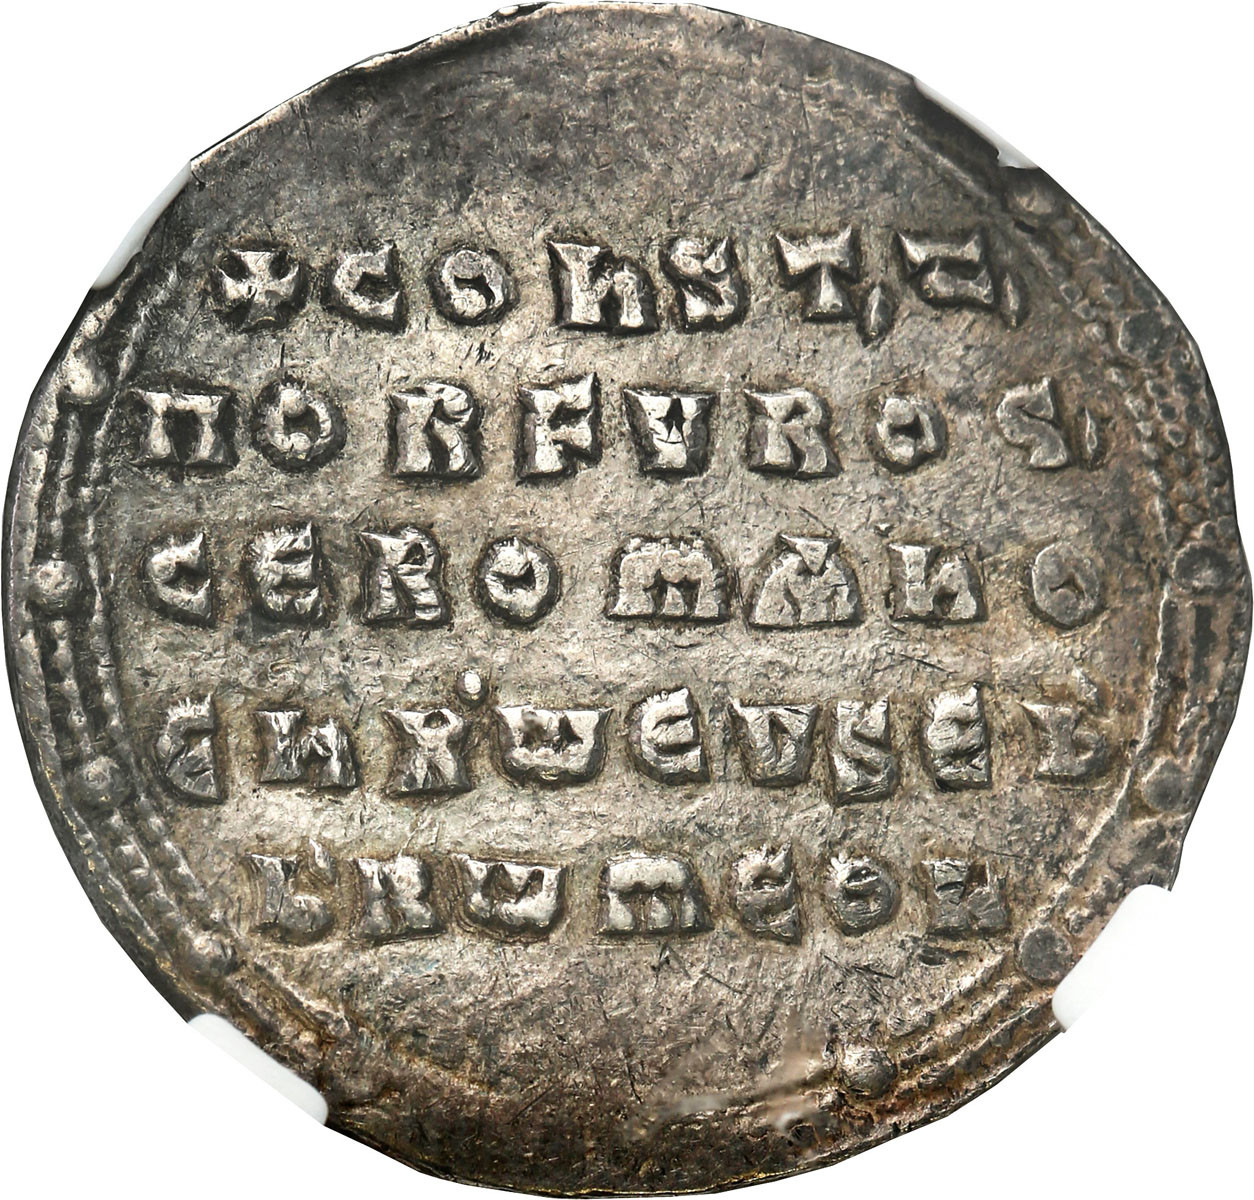 Bizancjum. Constantin VII, Roman I Cristopher (920-944), Miliaresion, Konstantynopol NGC Ch VF